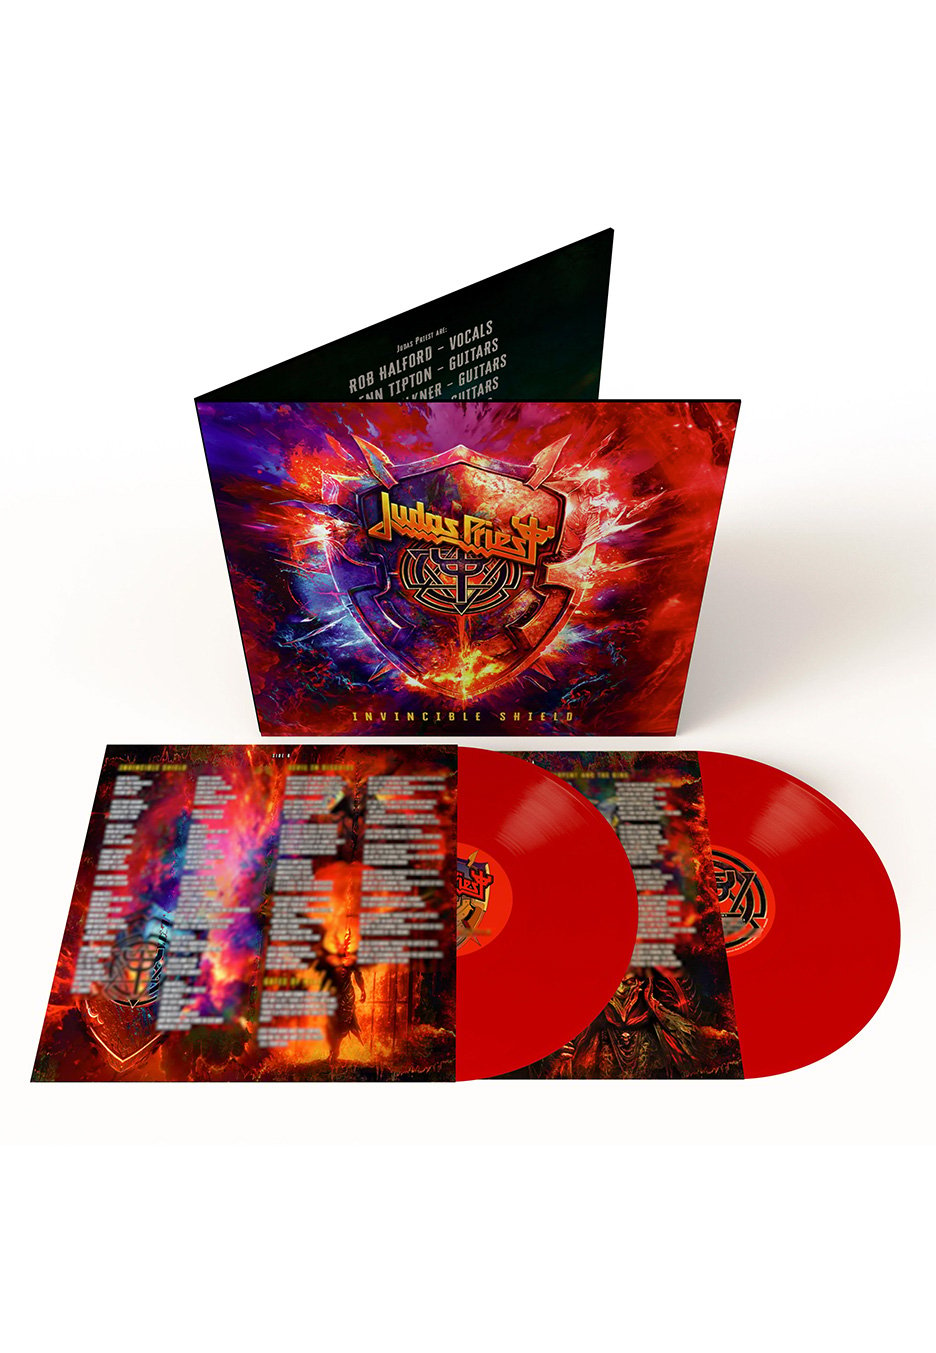 Judas Priest - Invincible Shield Ltd. Red - Colored 2 Vinyl